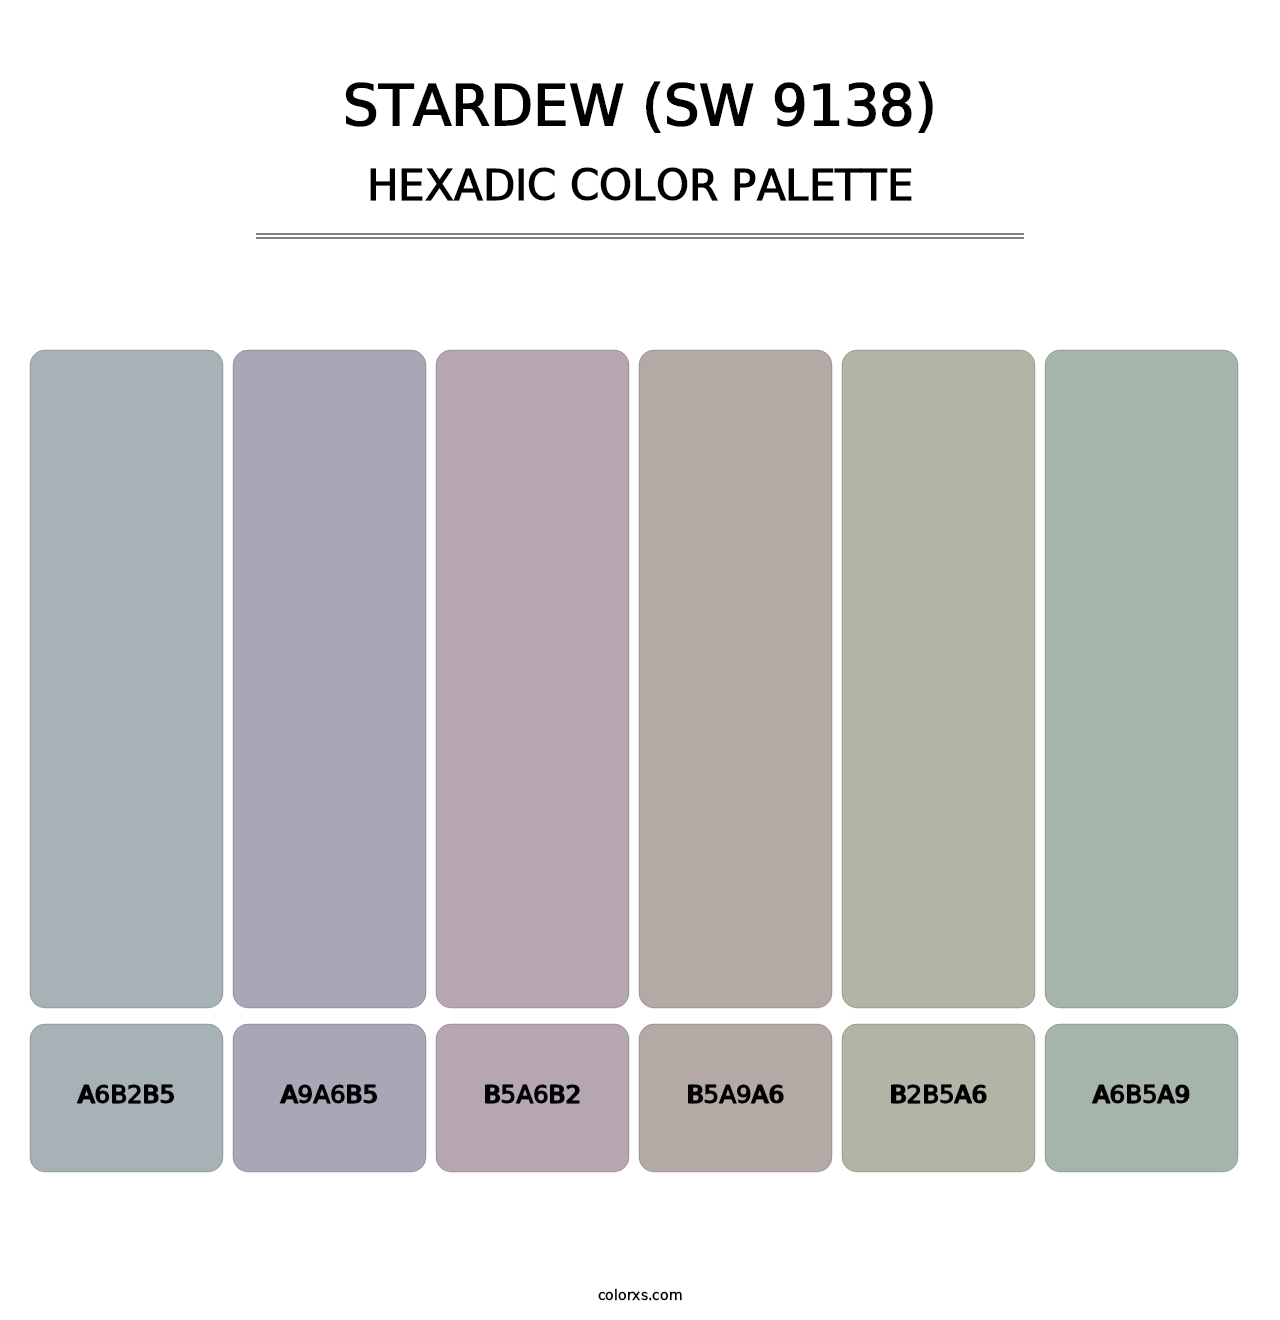 Stardew (SW 9138) - Hexadic Color Palette